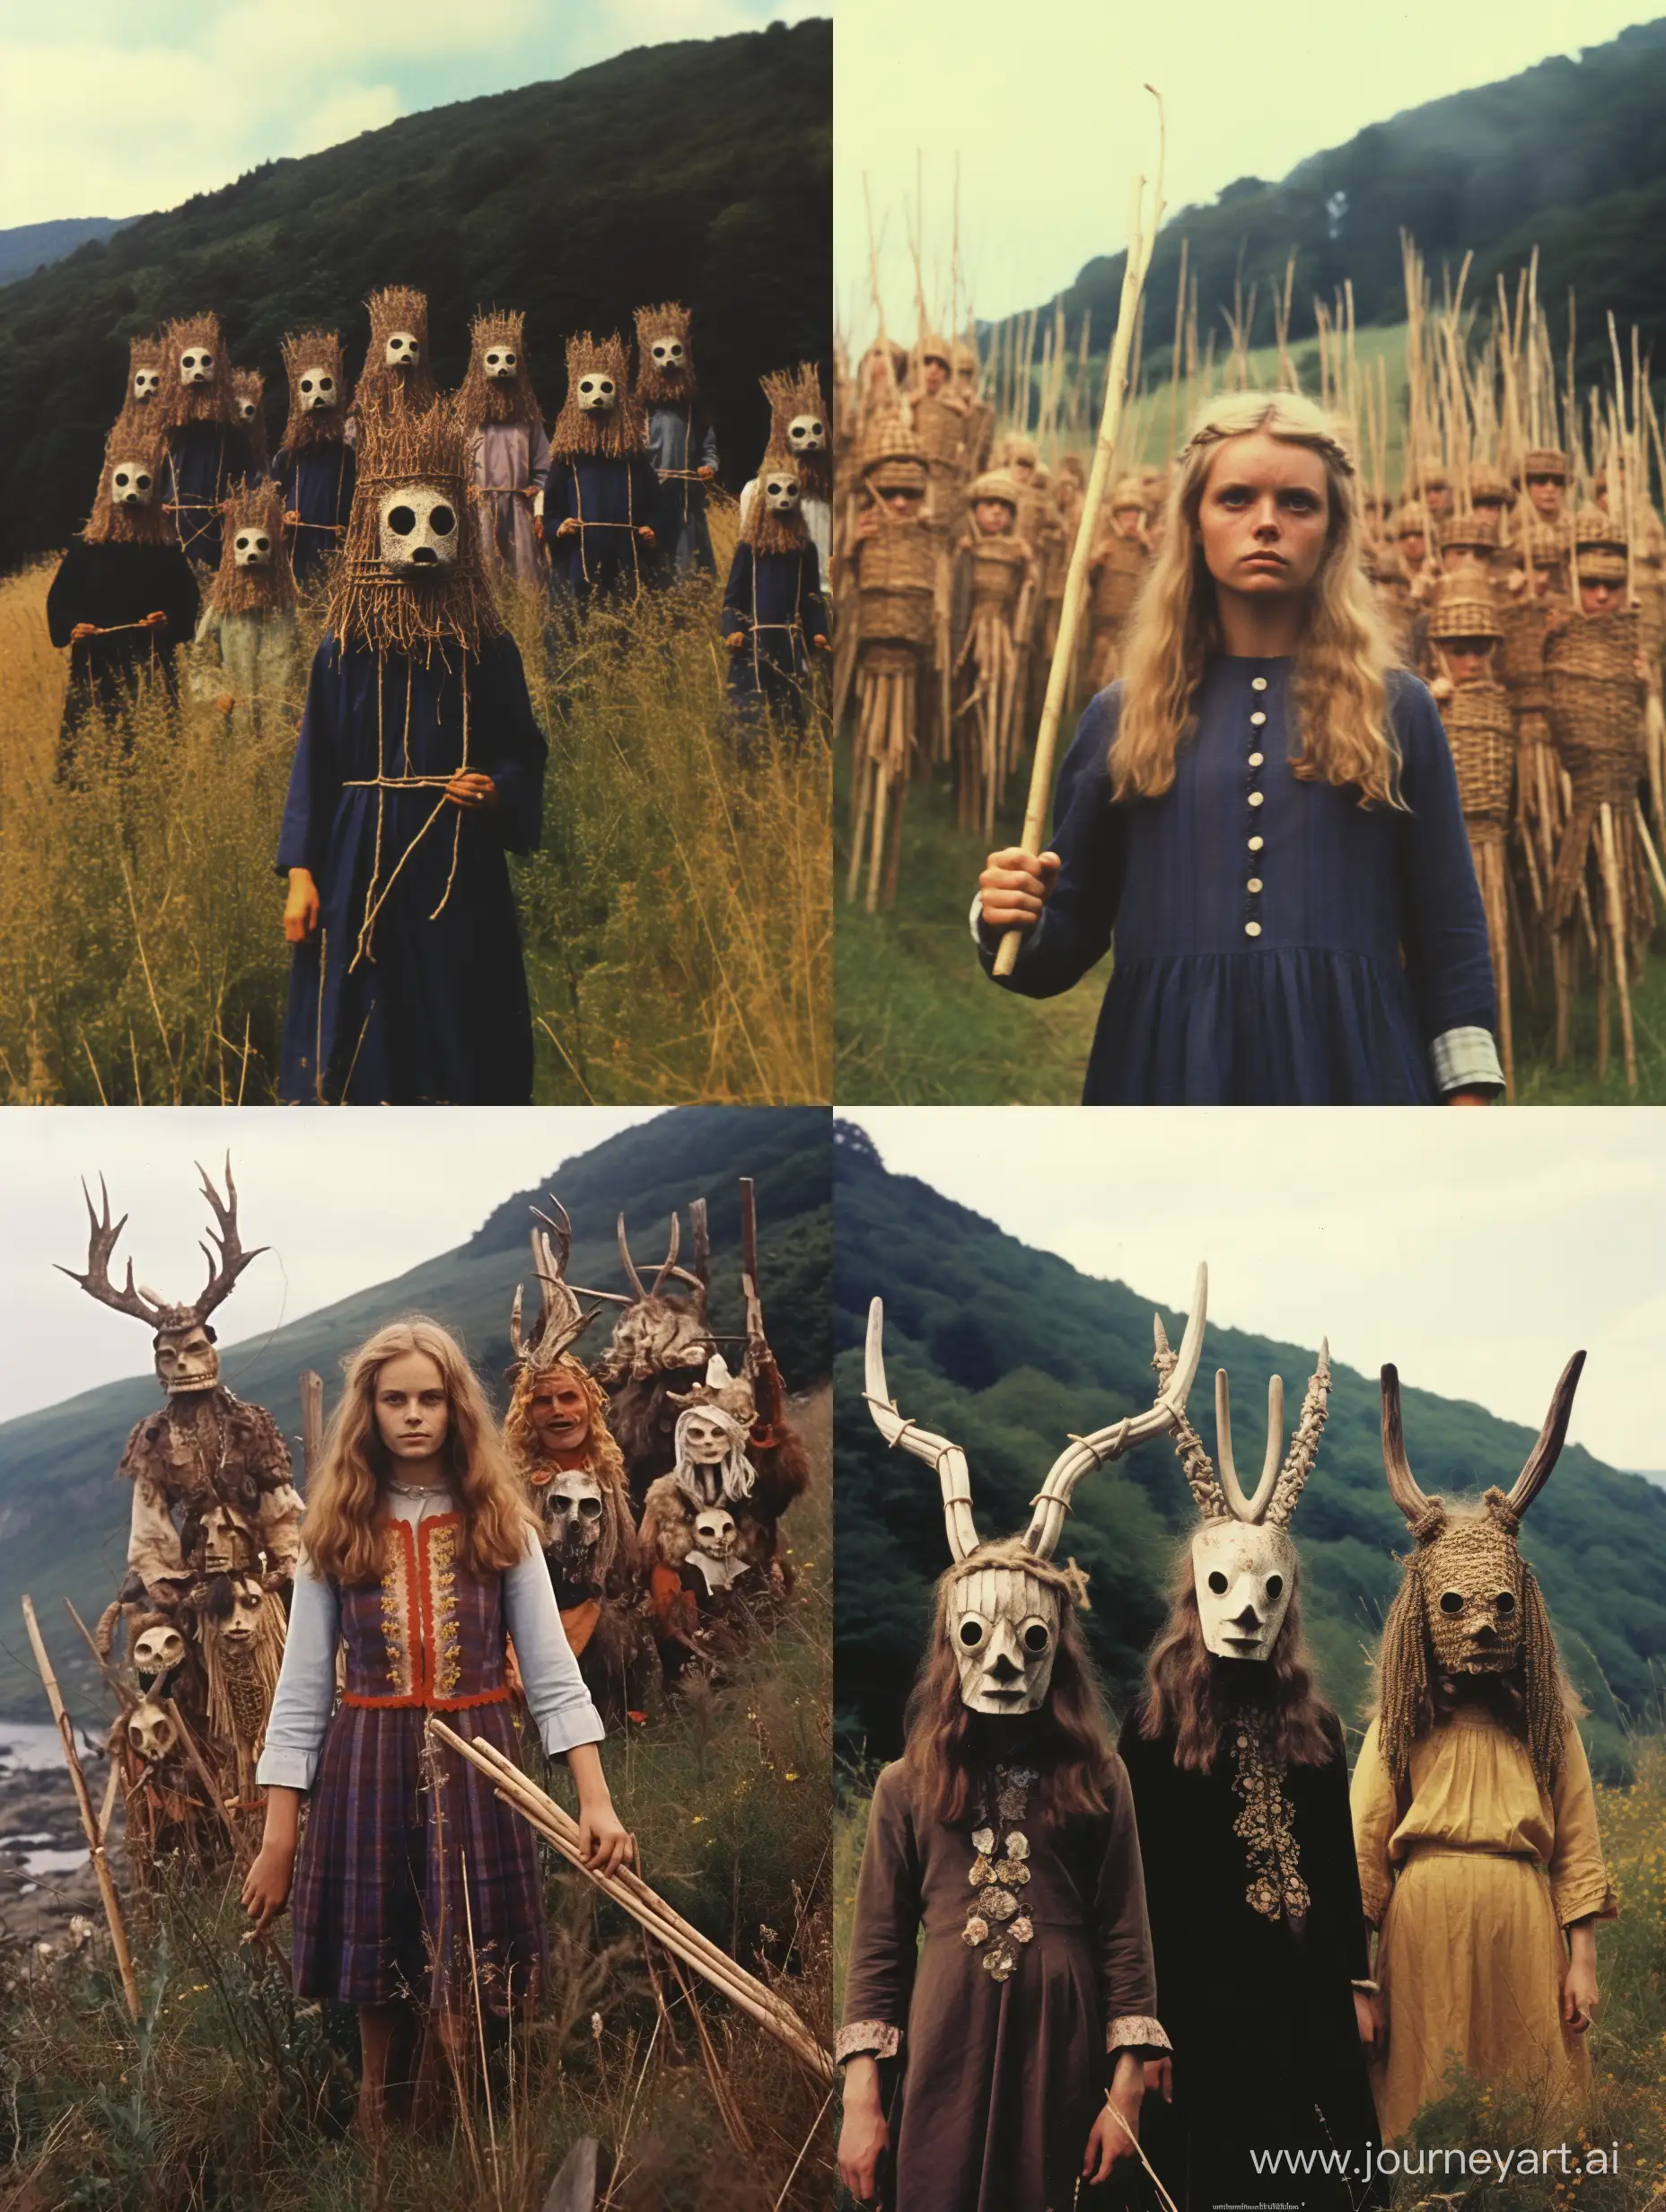 Eerie-1970s-Folk-Horror-Scene-Unhinged-Ritual-in-British-Rural-Setting